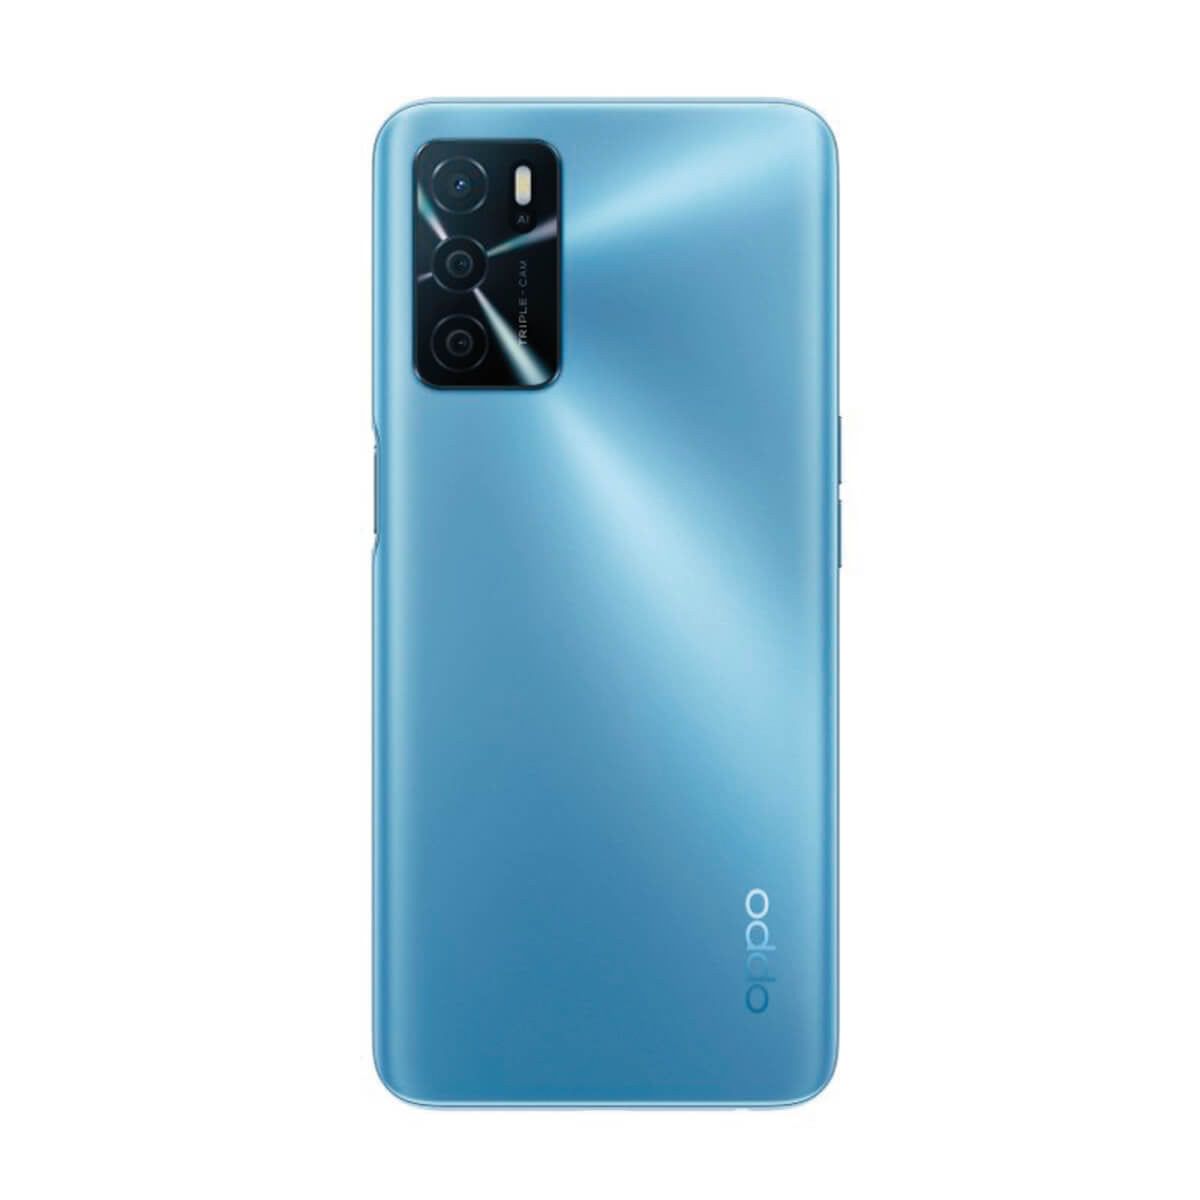 Oppo A16 3GB/32GB Azul (Pearl Blue) Dual SIM CPH2269 Smartphone | Oppo